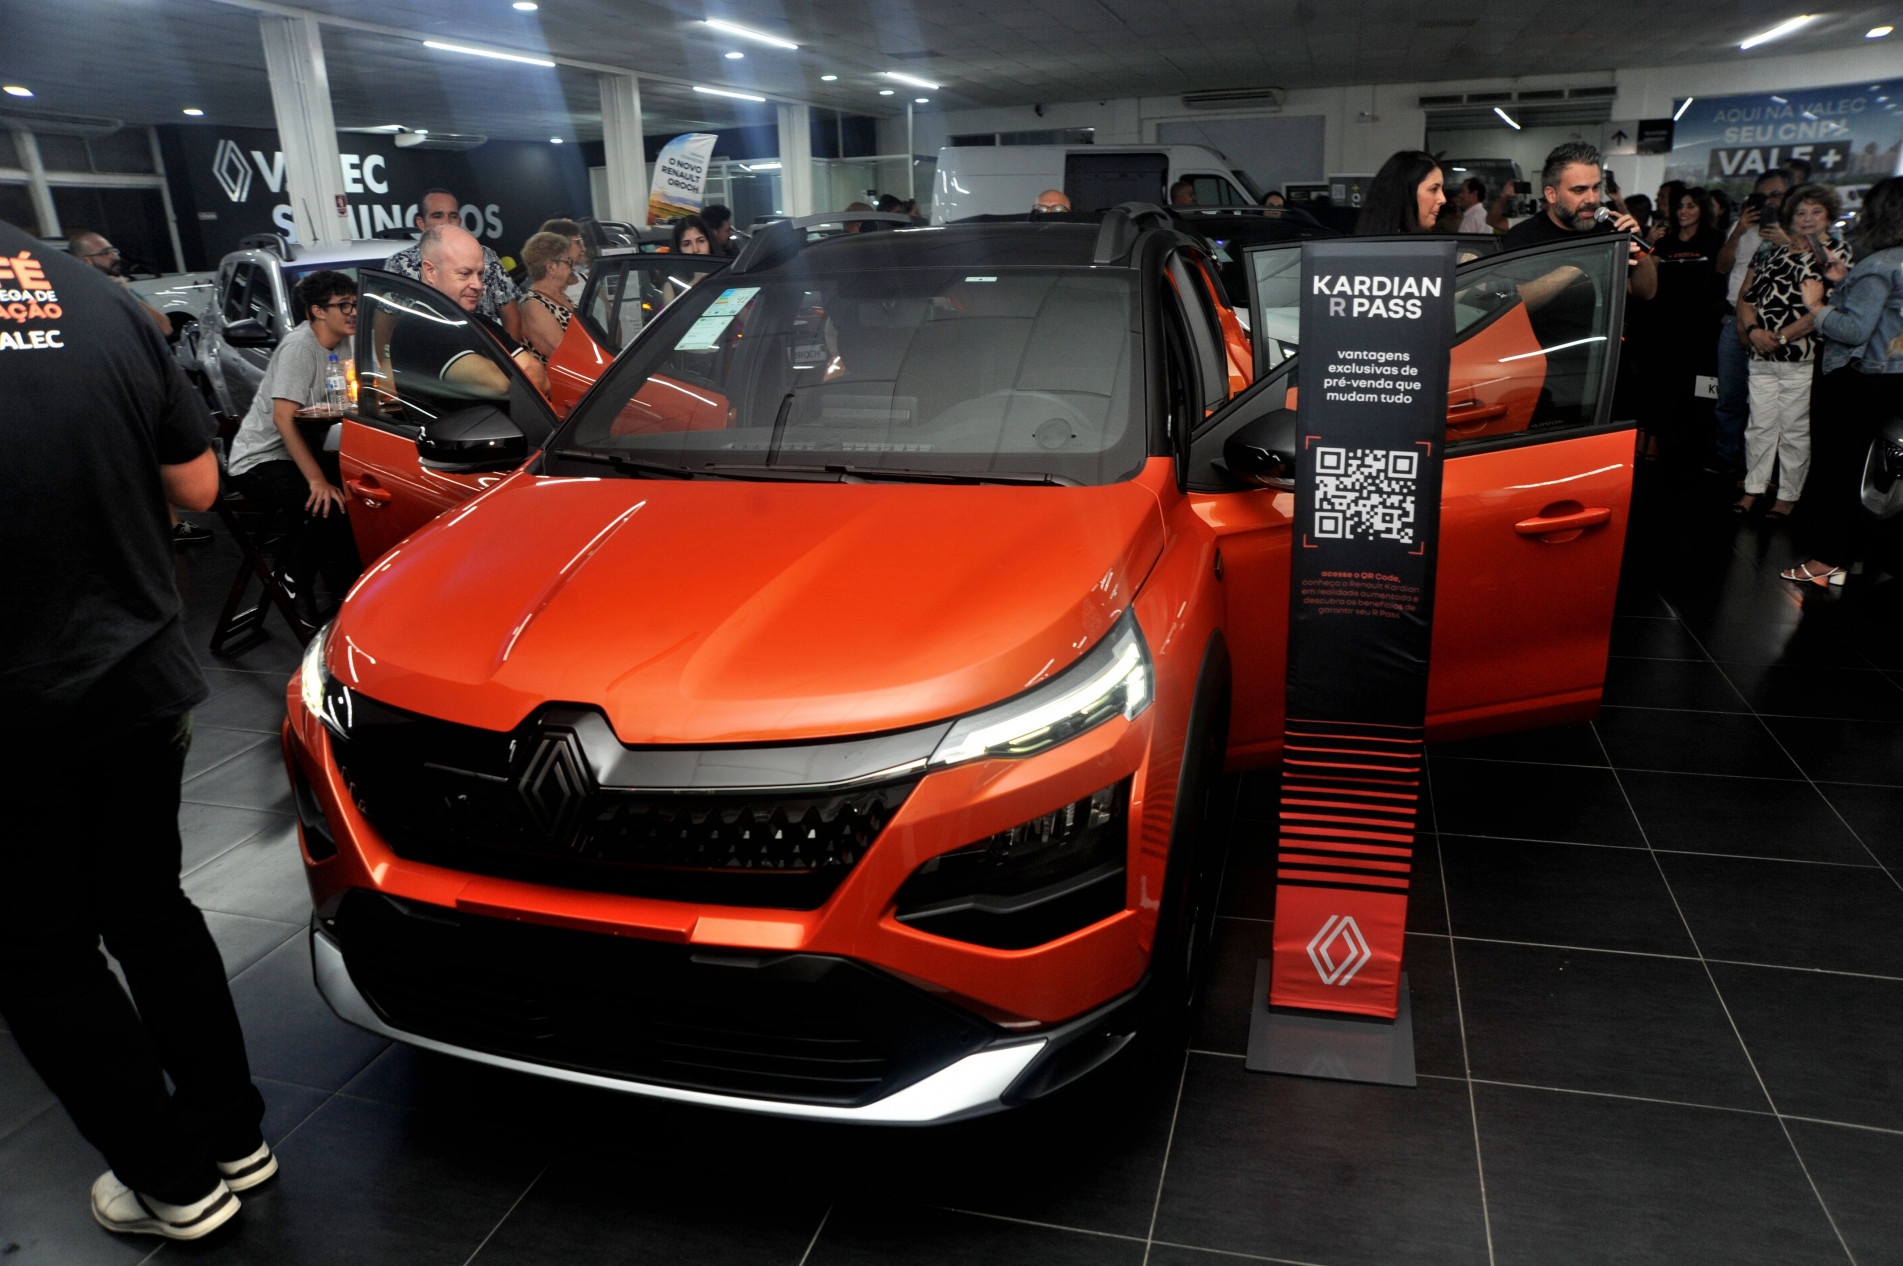 Lançamento do Renault Kardian na Valec